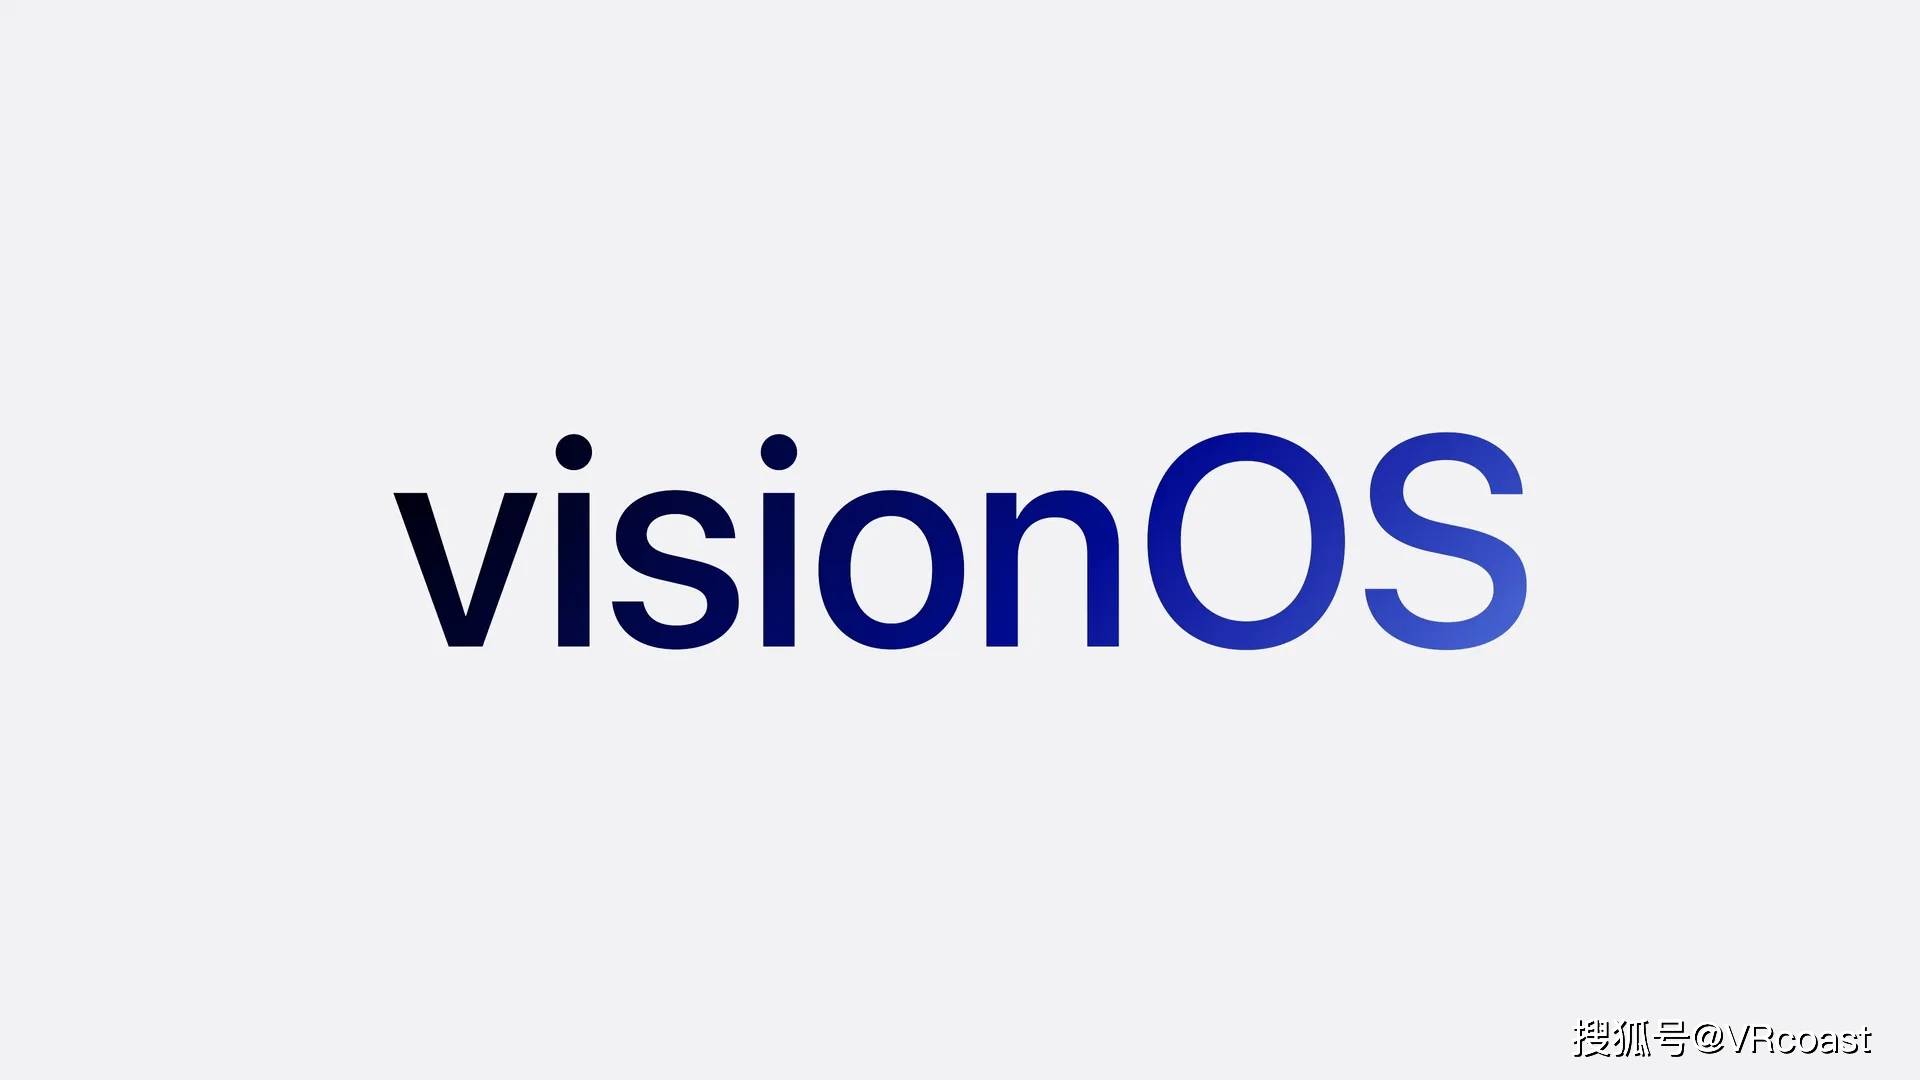 visionos 2 beta 版现已可供 apple vision pro 用户下载和安装